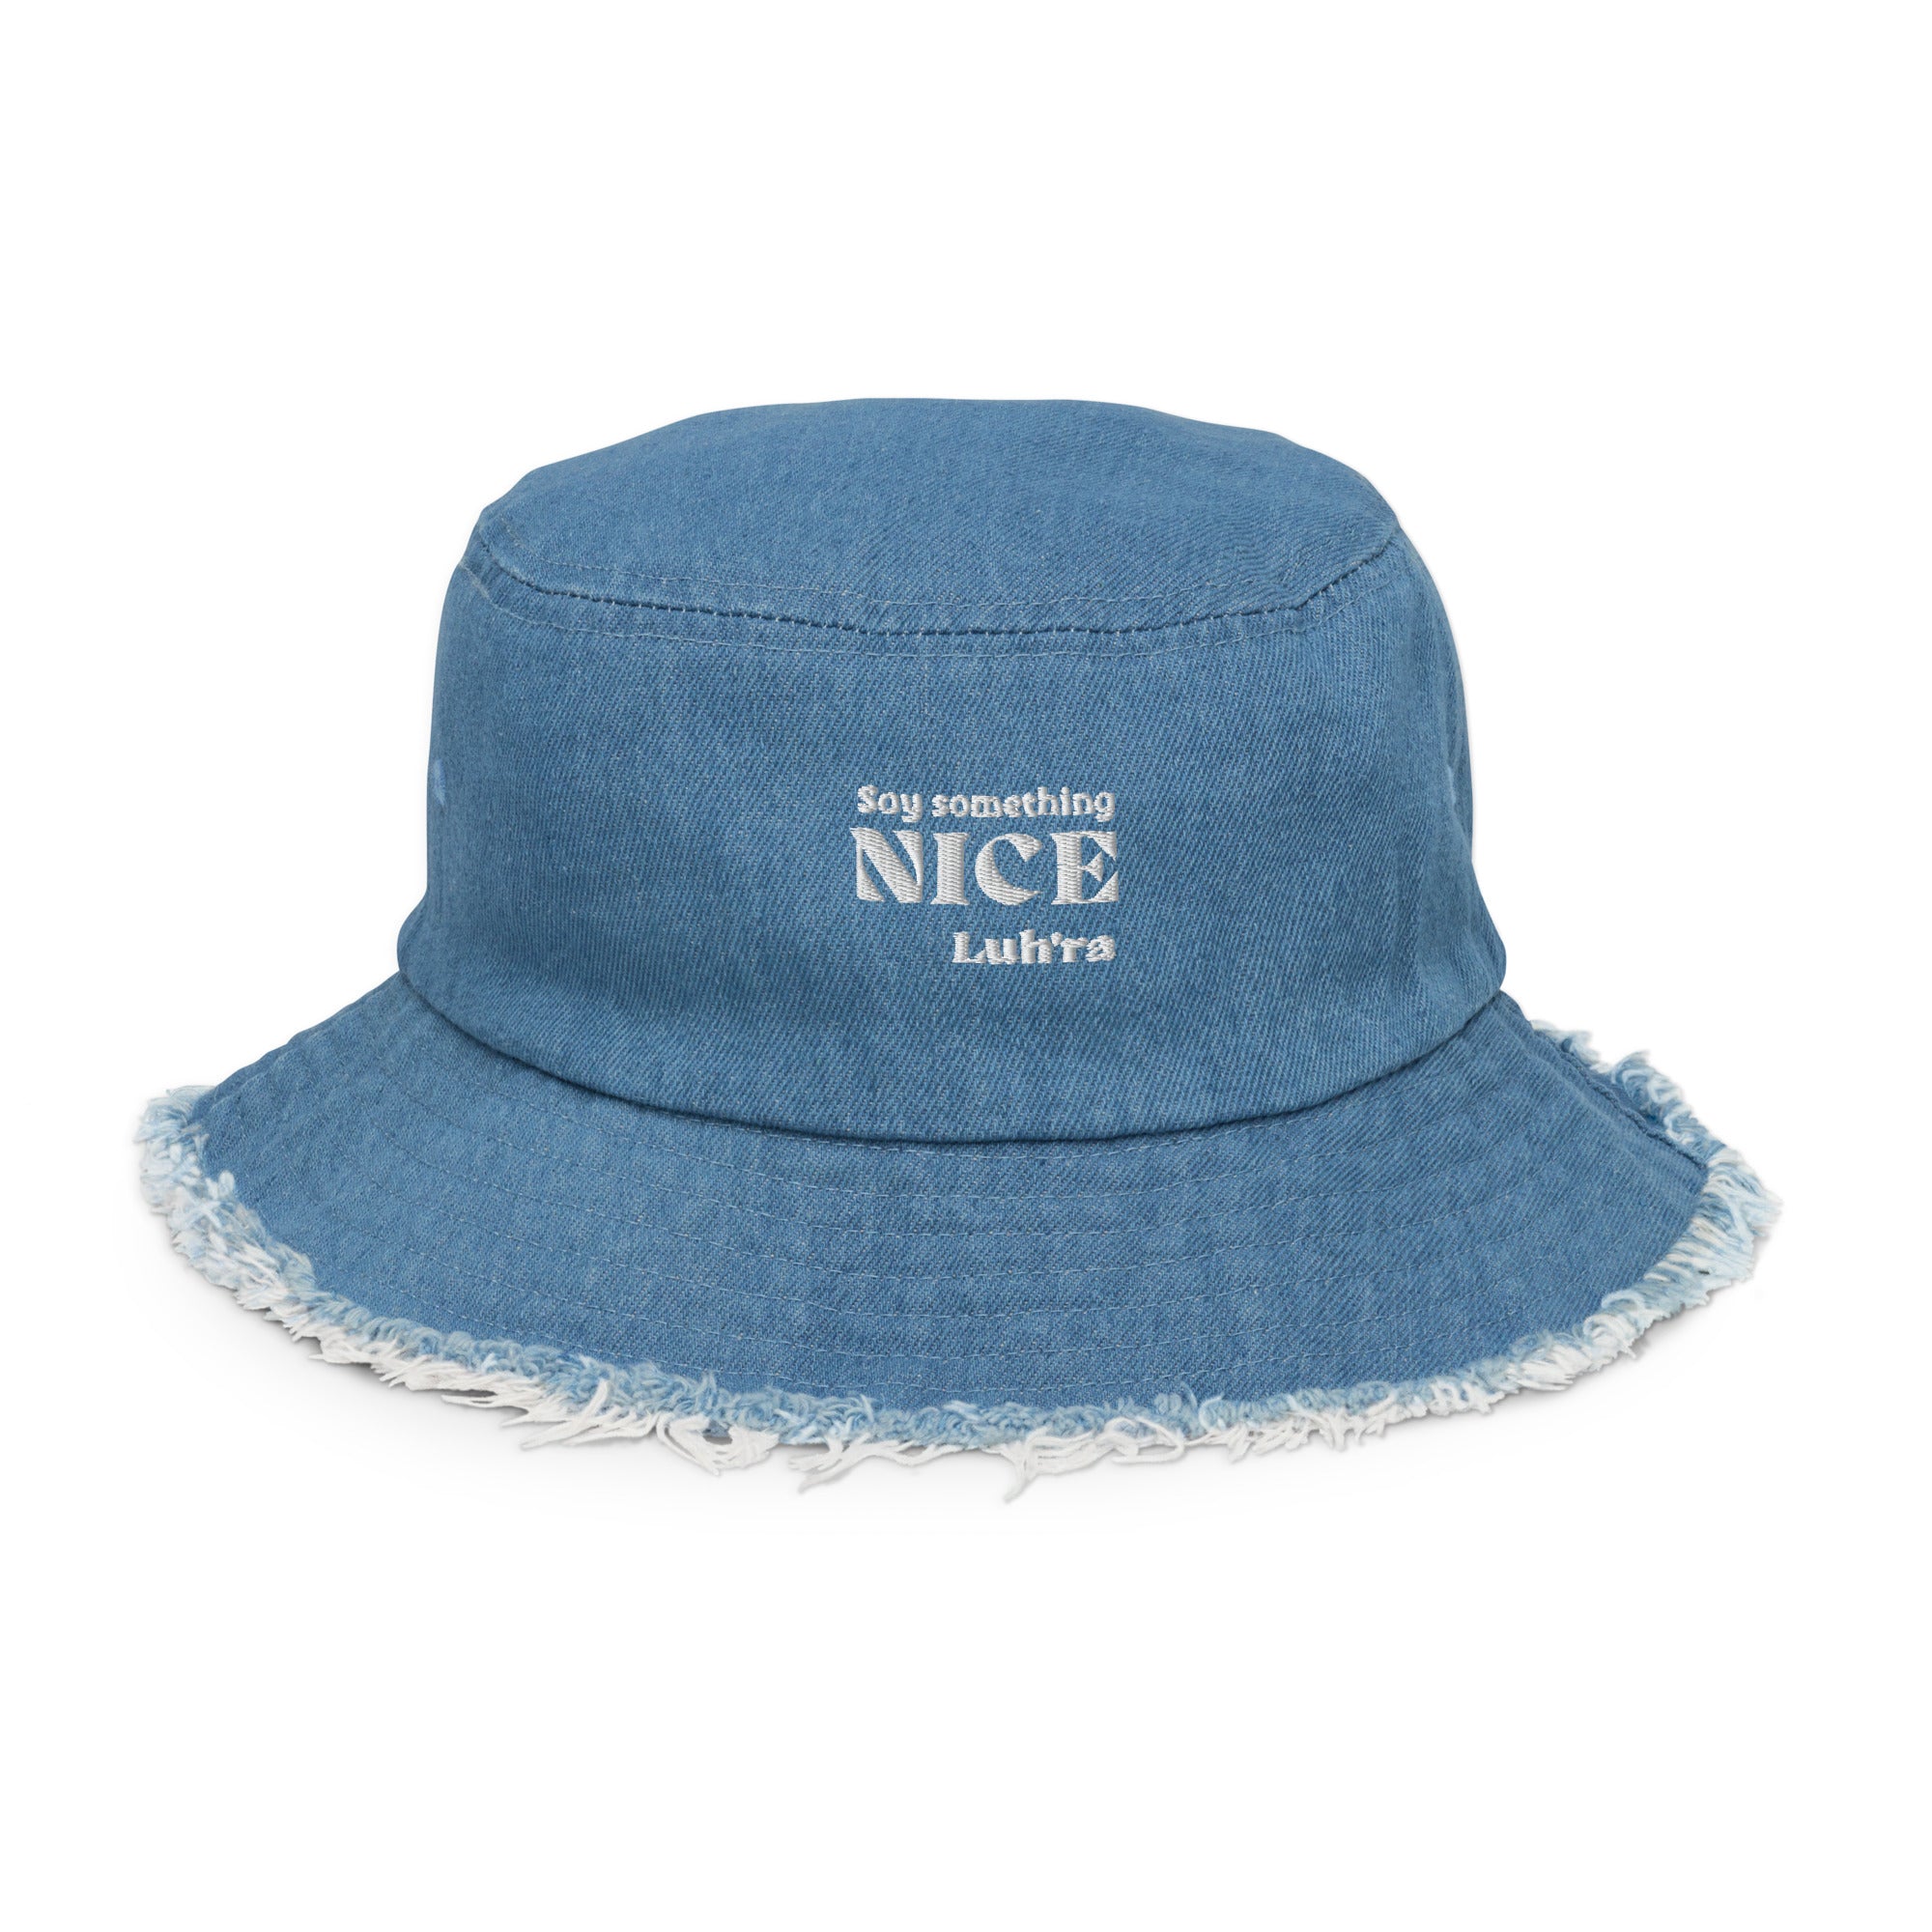 Luh'ra Say Something Nice - denim bucket hat